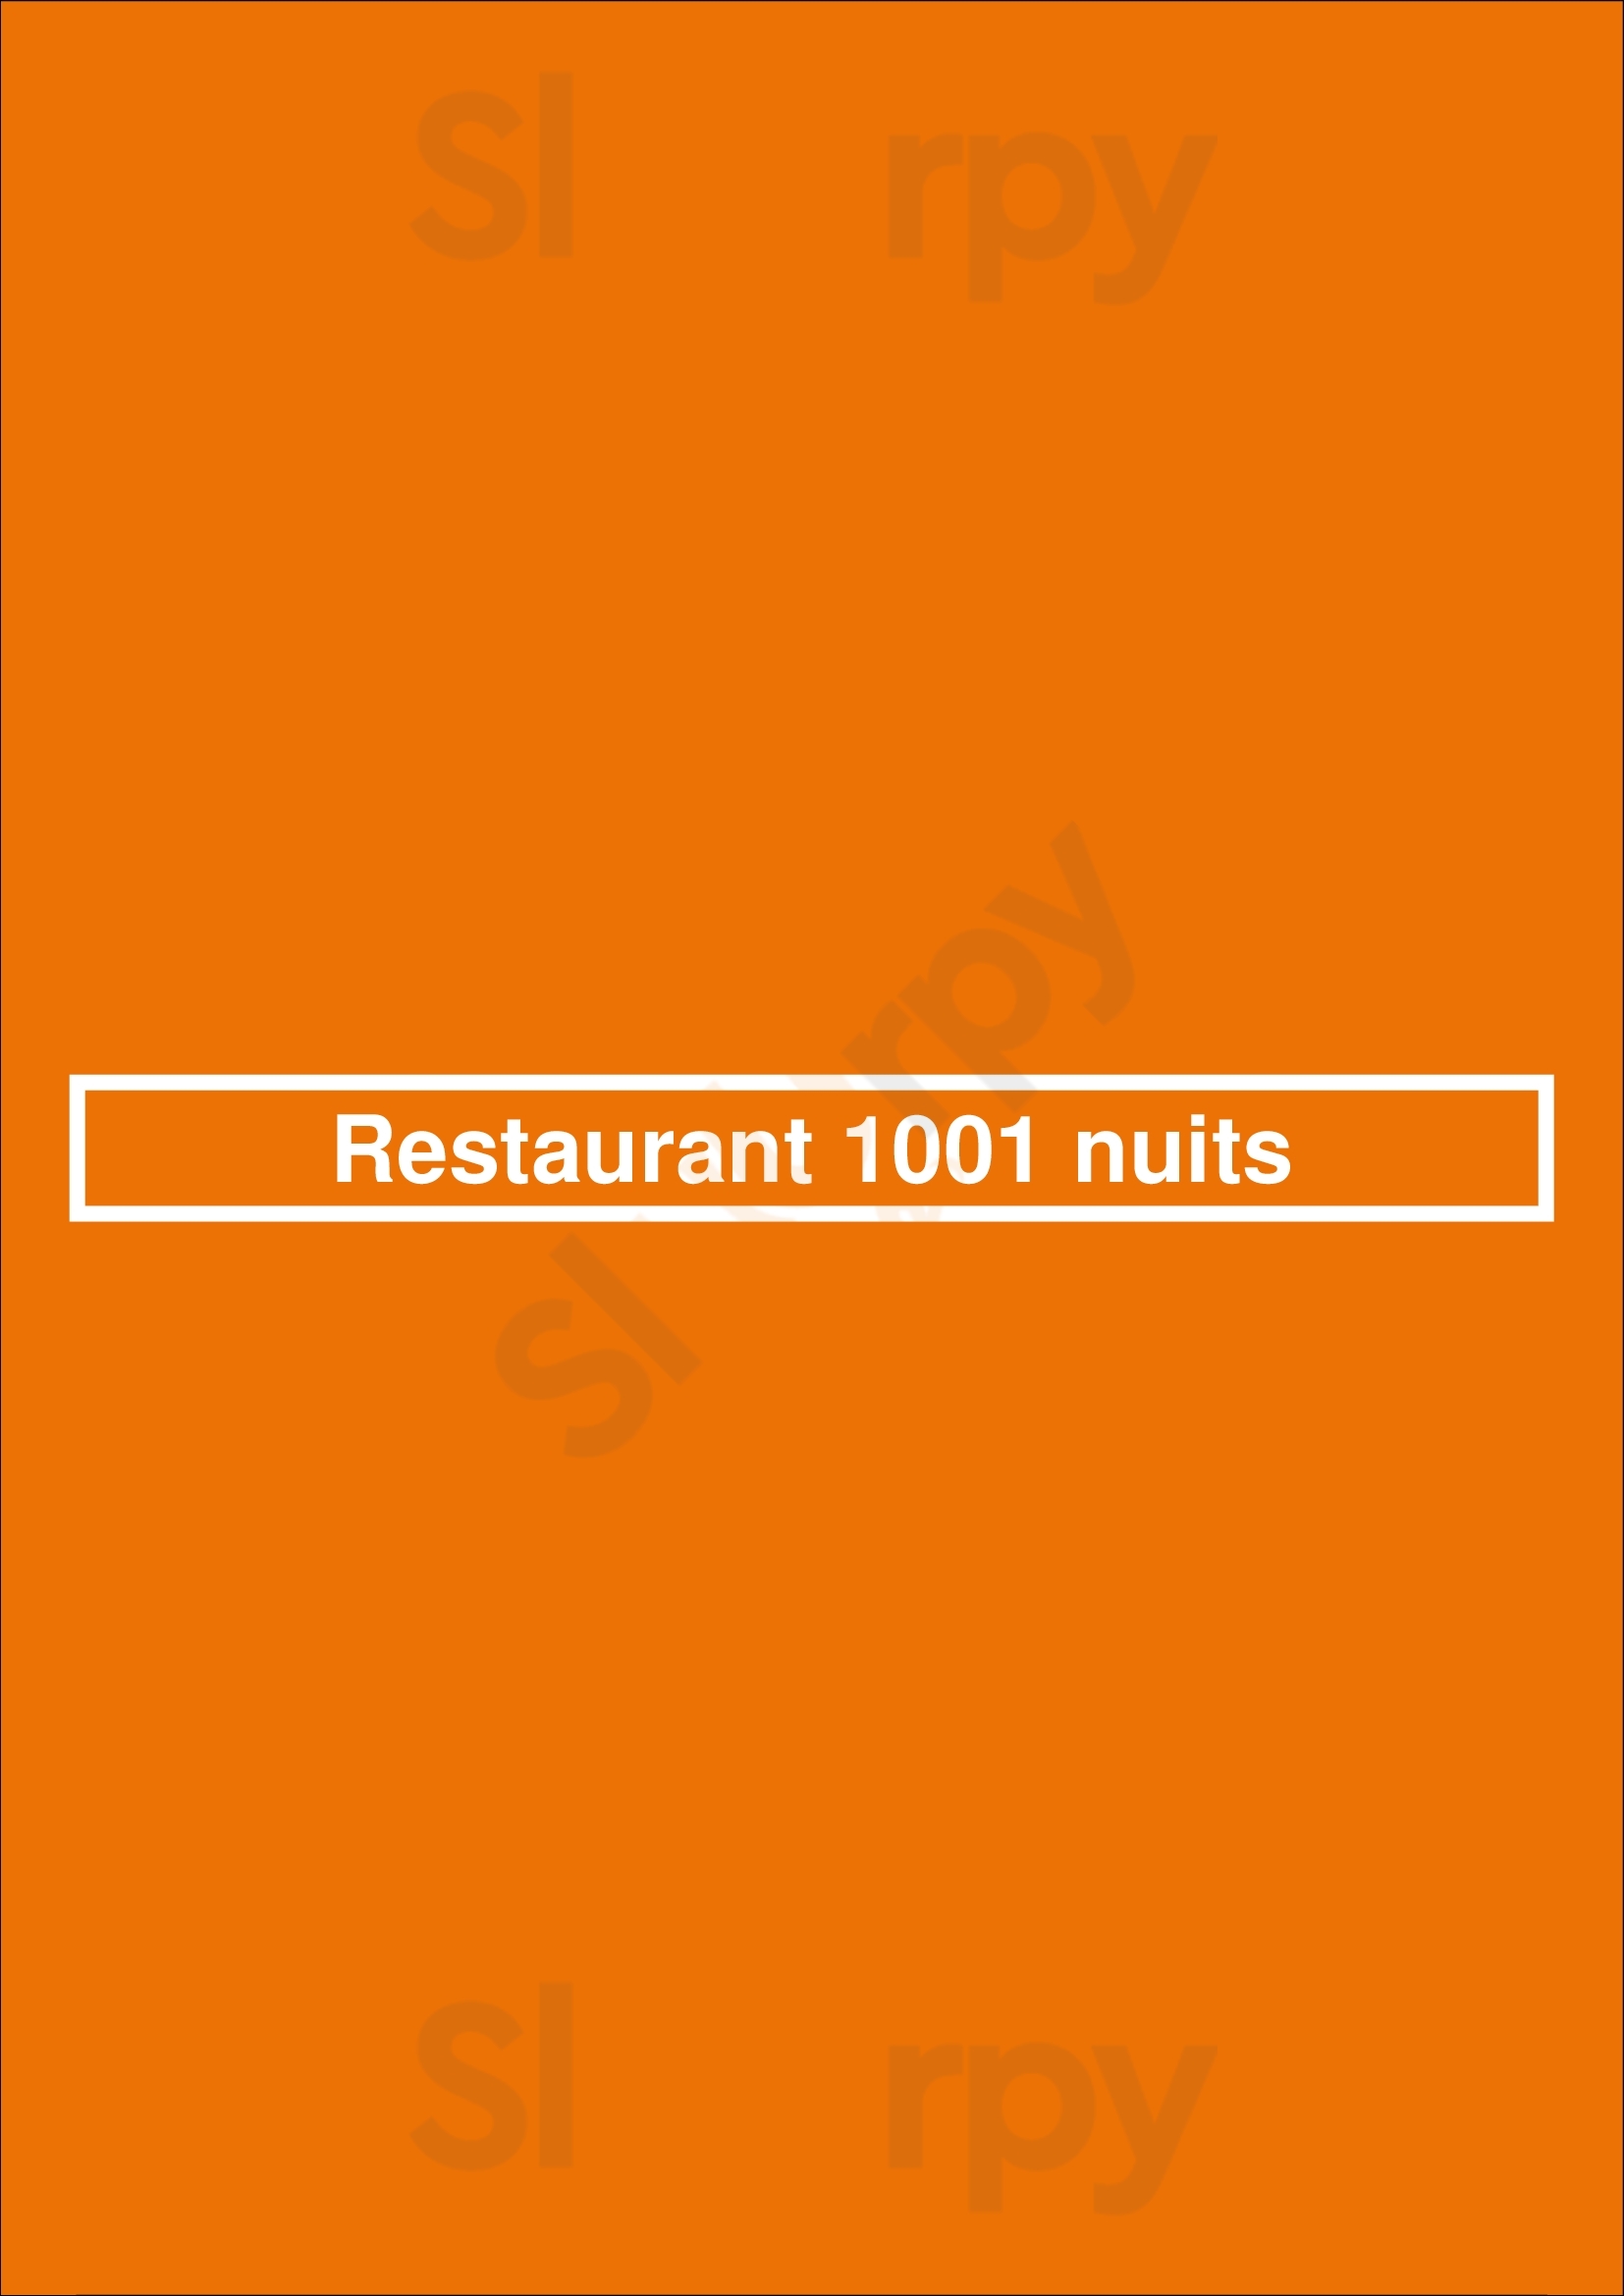 Restaurant 1001 Nuits Paris Menu - 1